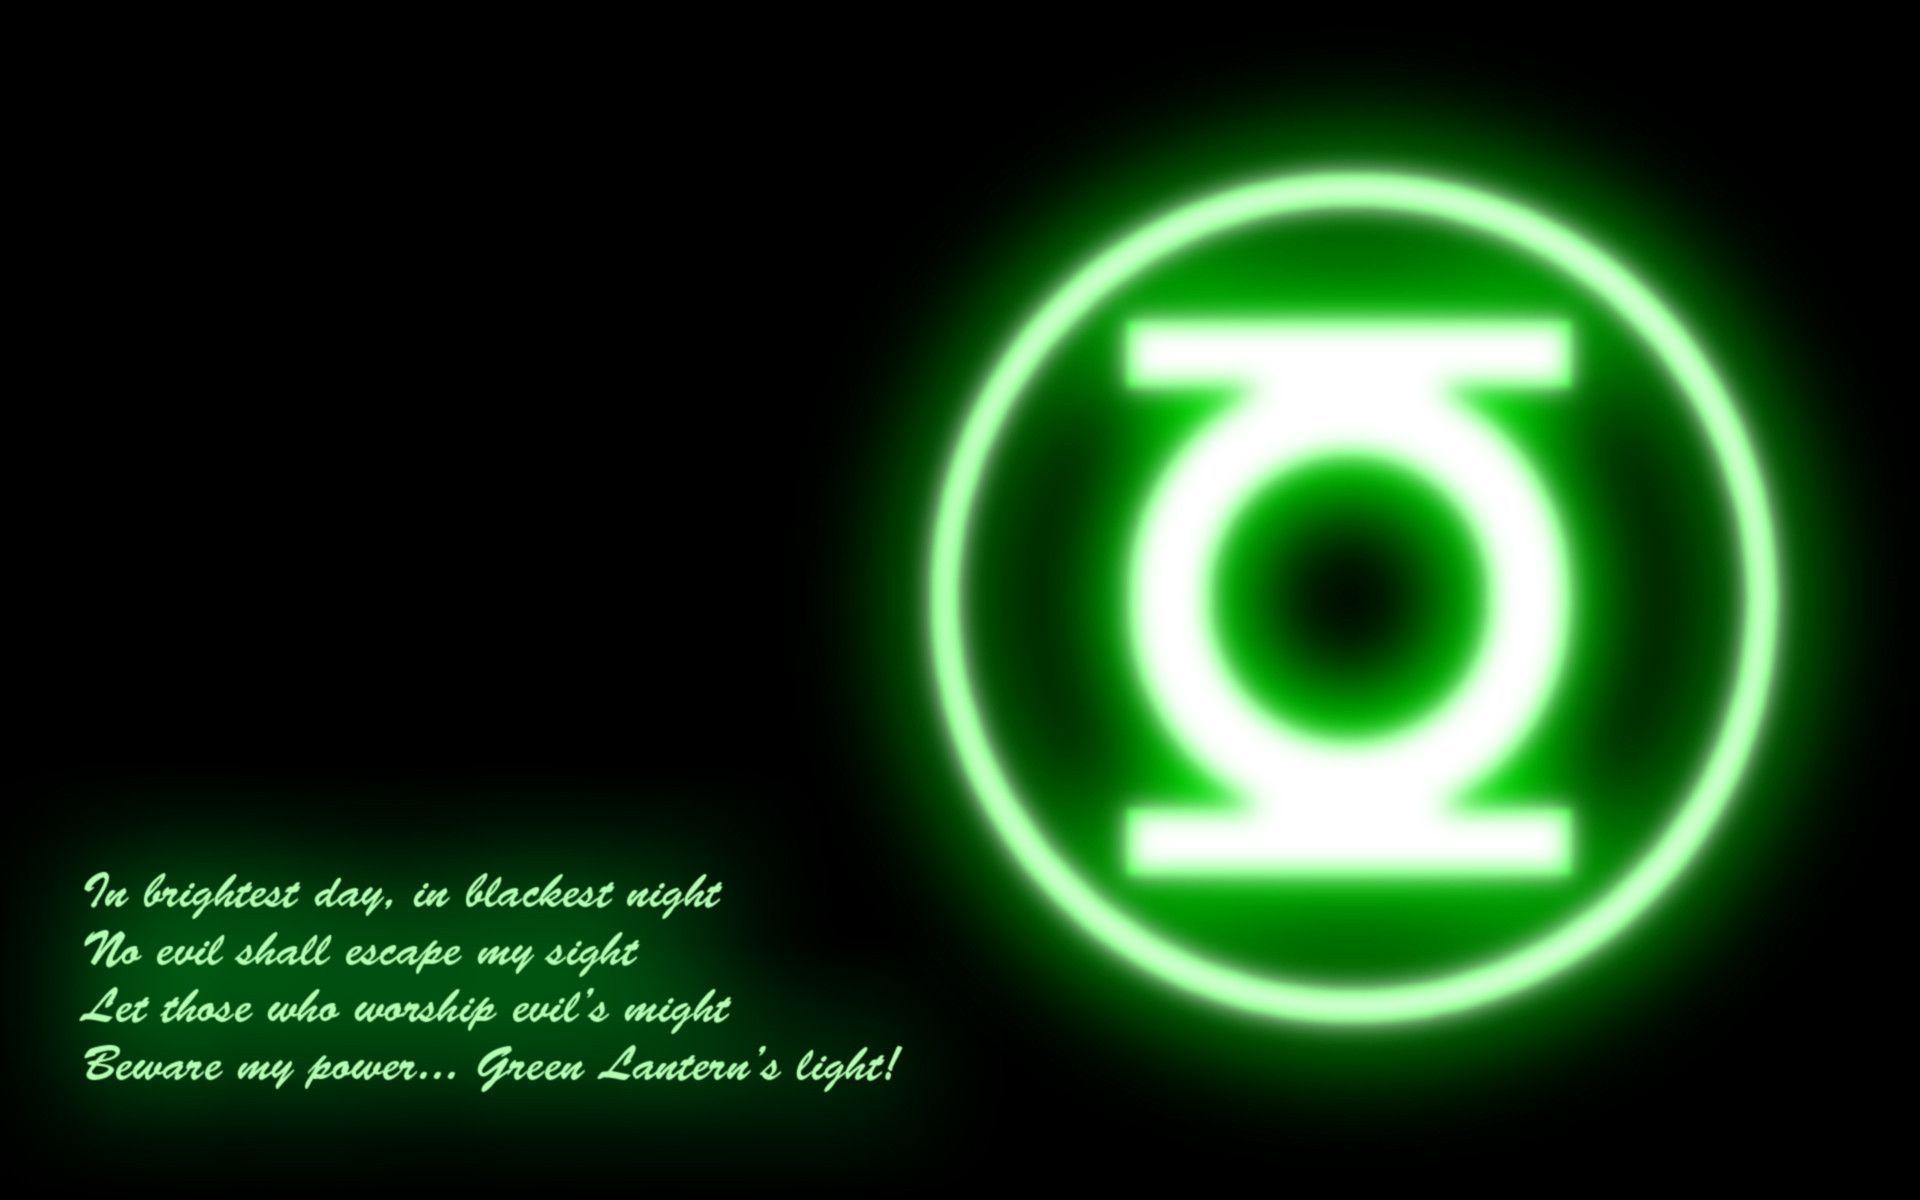 Green Lantern_